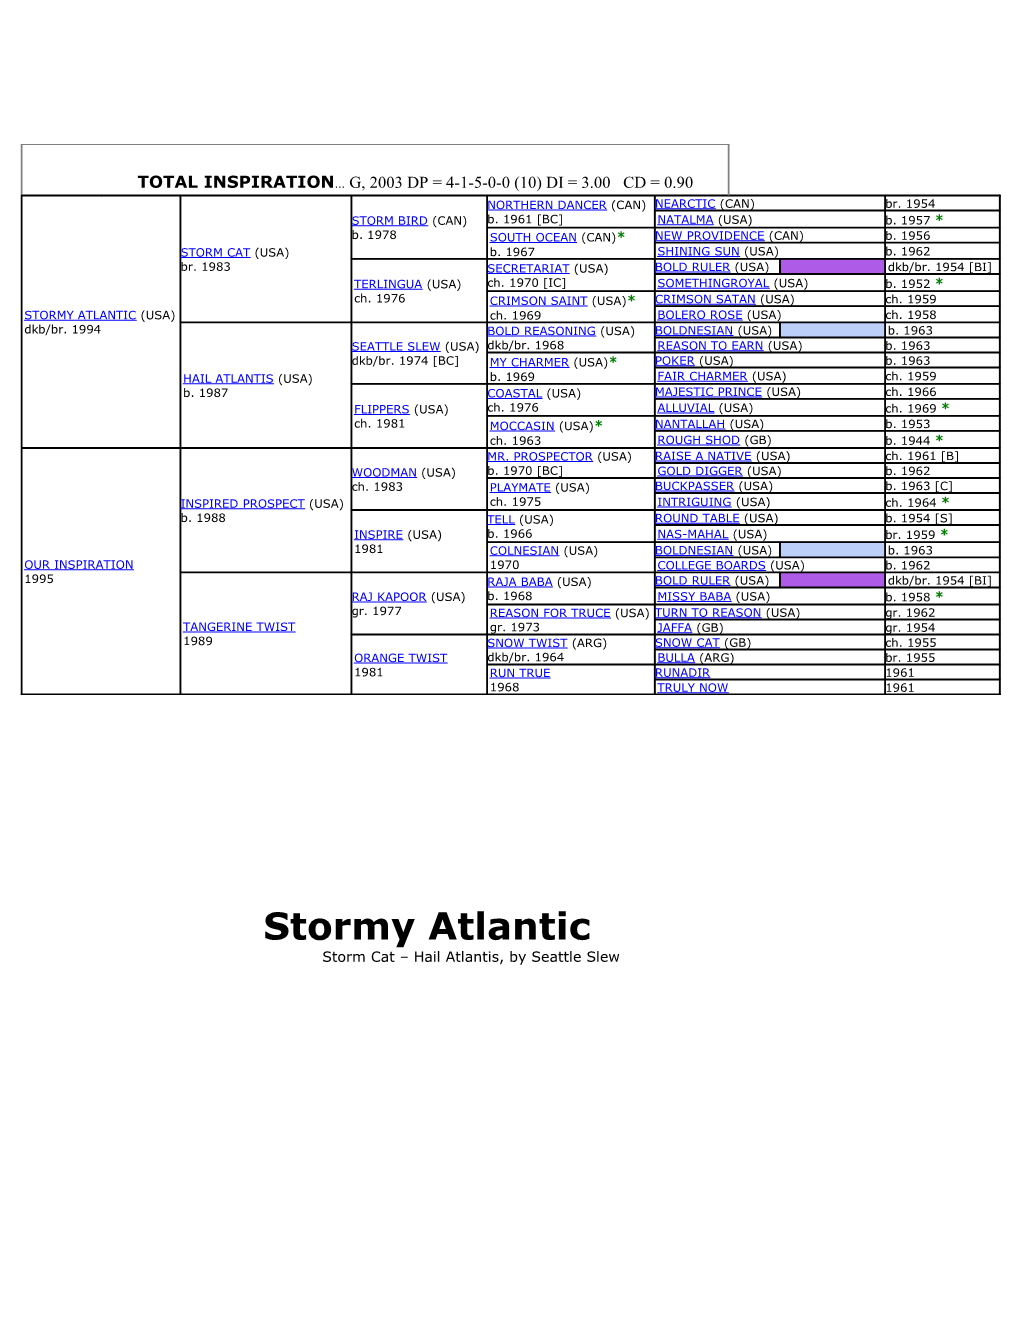 Stormy Atlantic Storm Cat Hail Atlantis, by Seattle Slew